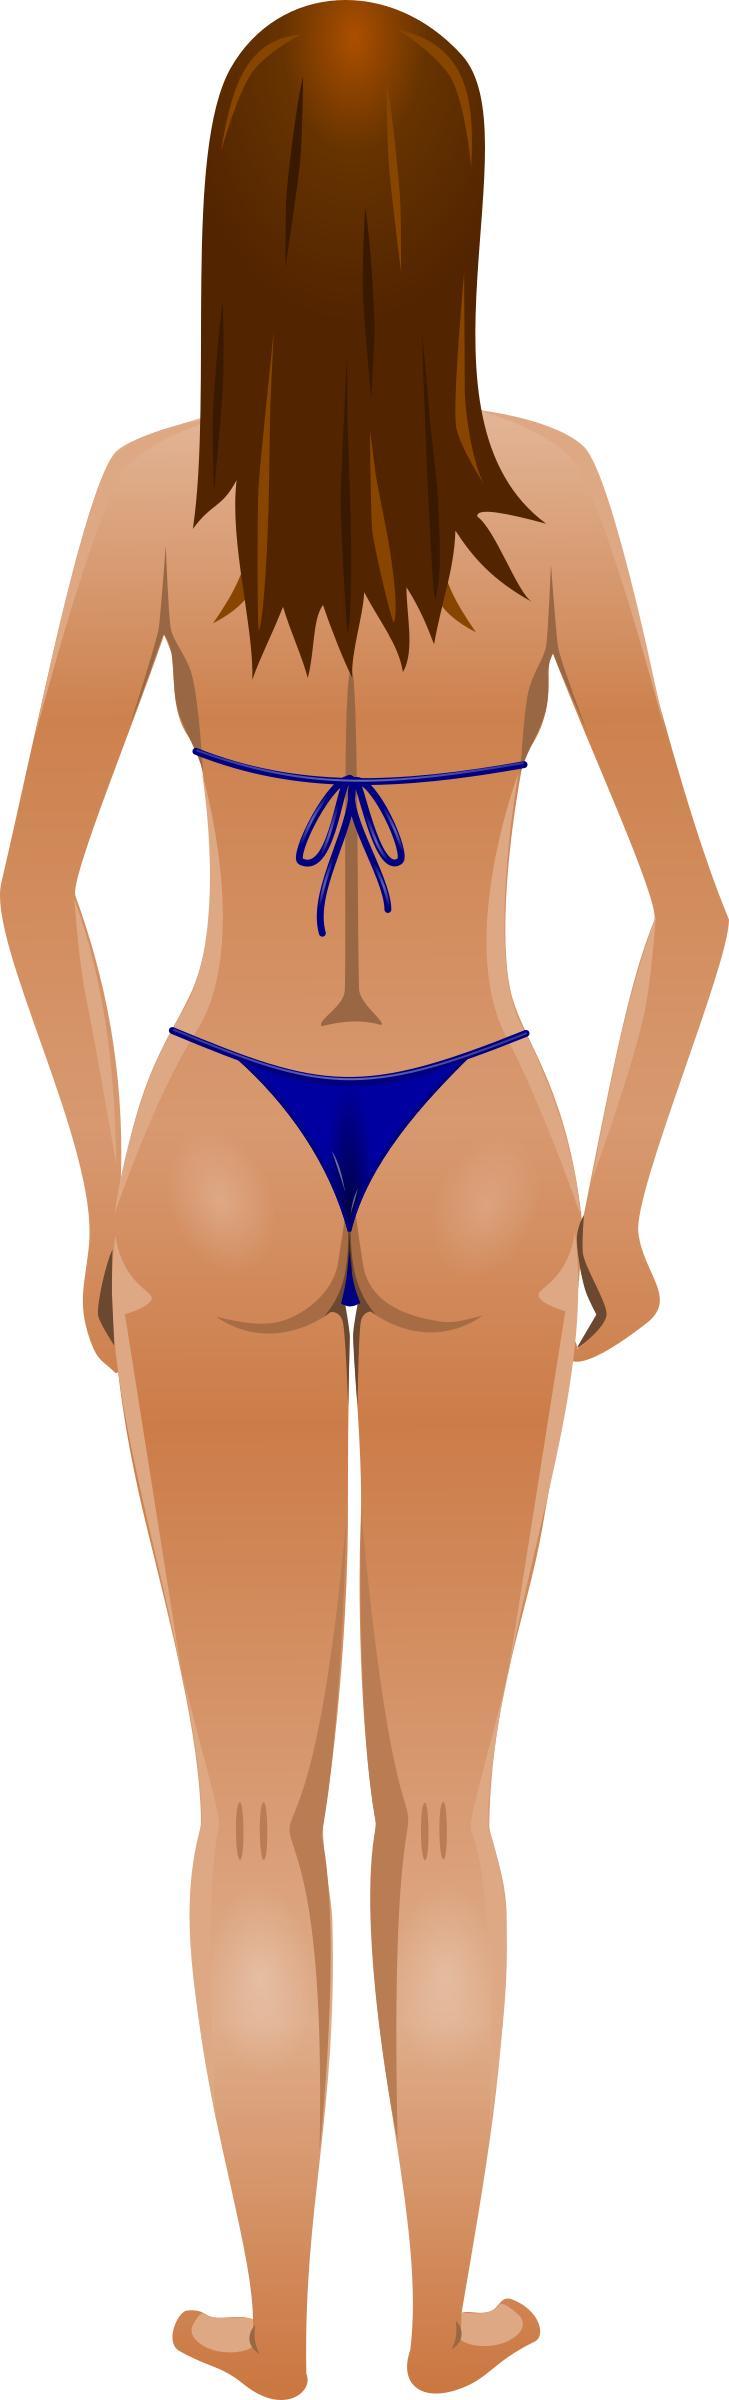 Young lady (light skin, blue bikini, brown hair) png transparent